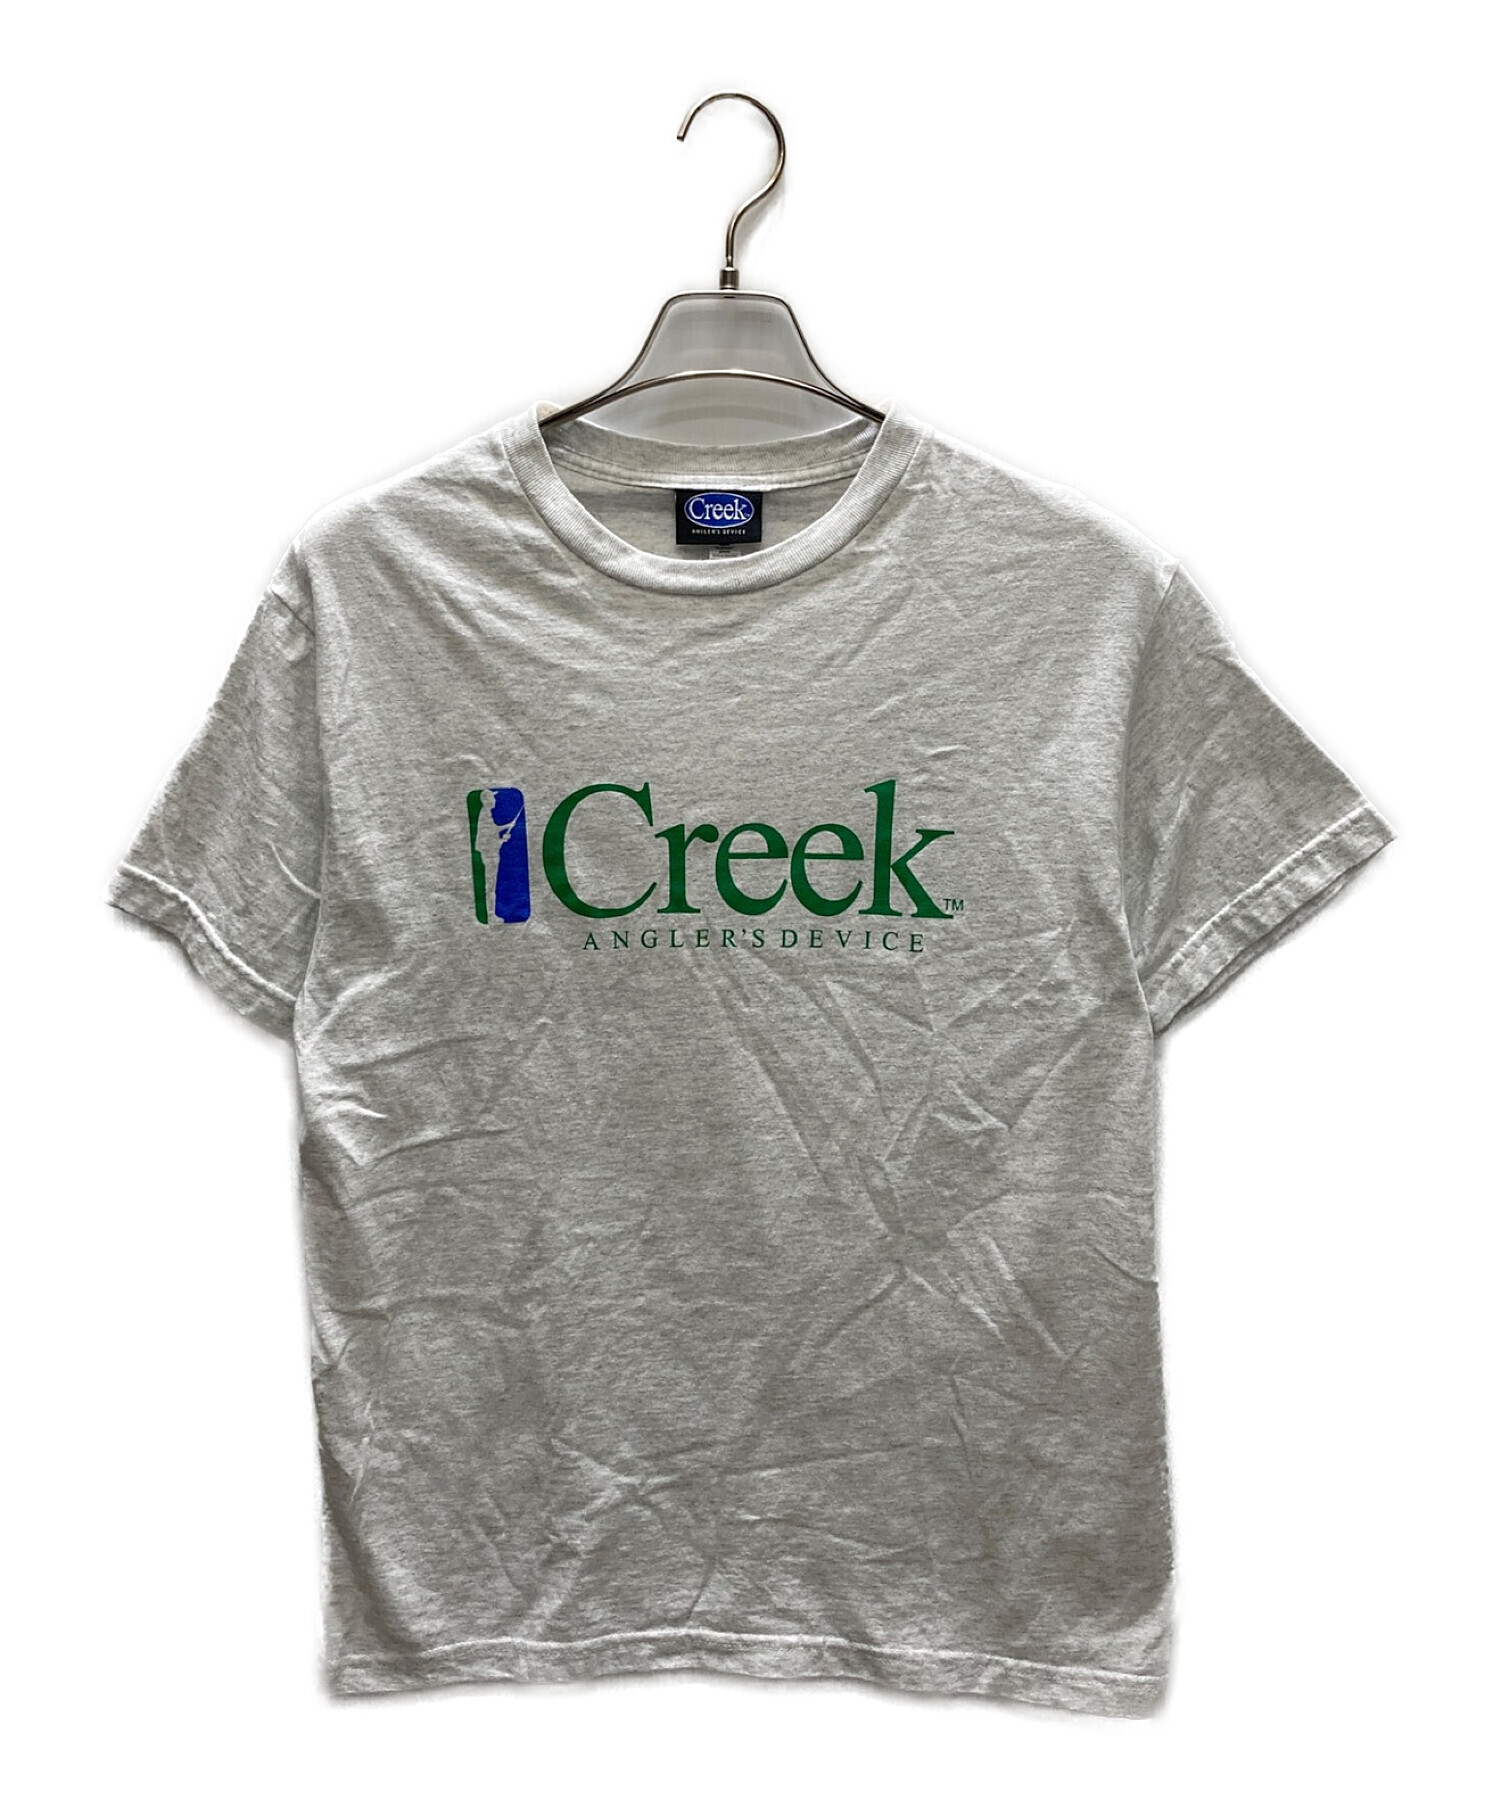 min-nanoCreek Angler's Device tee t-shirt